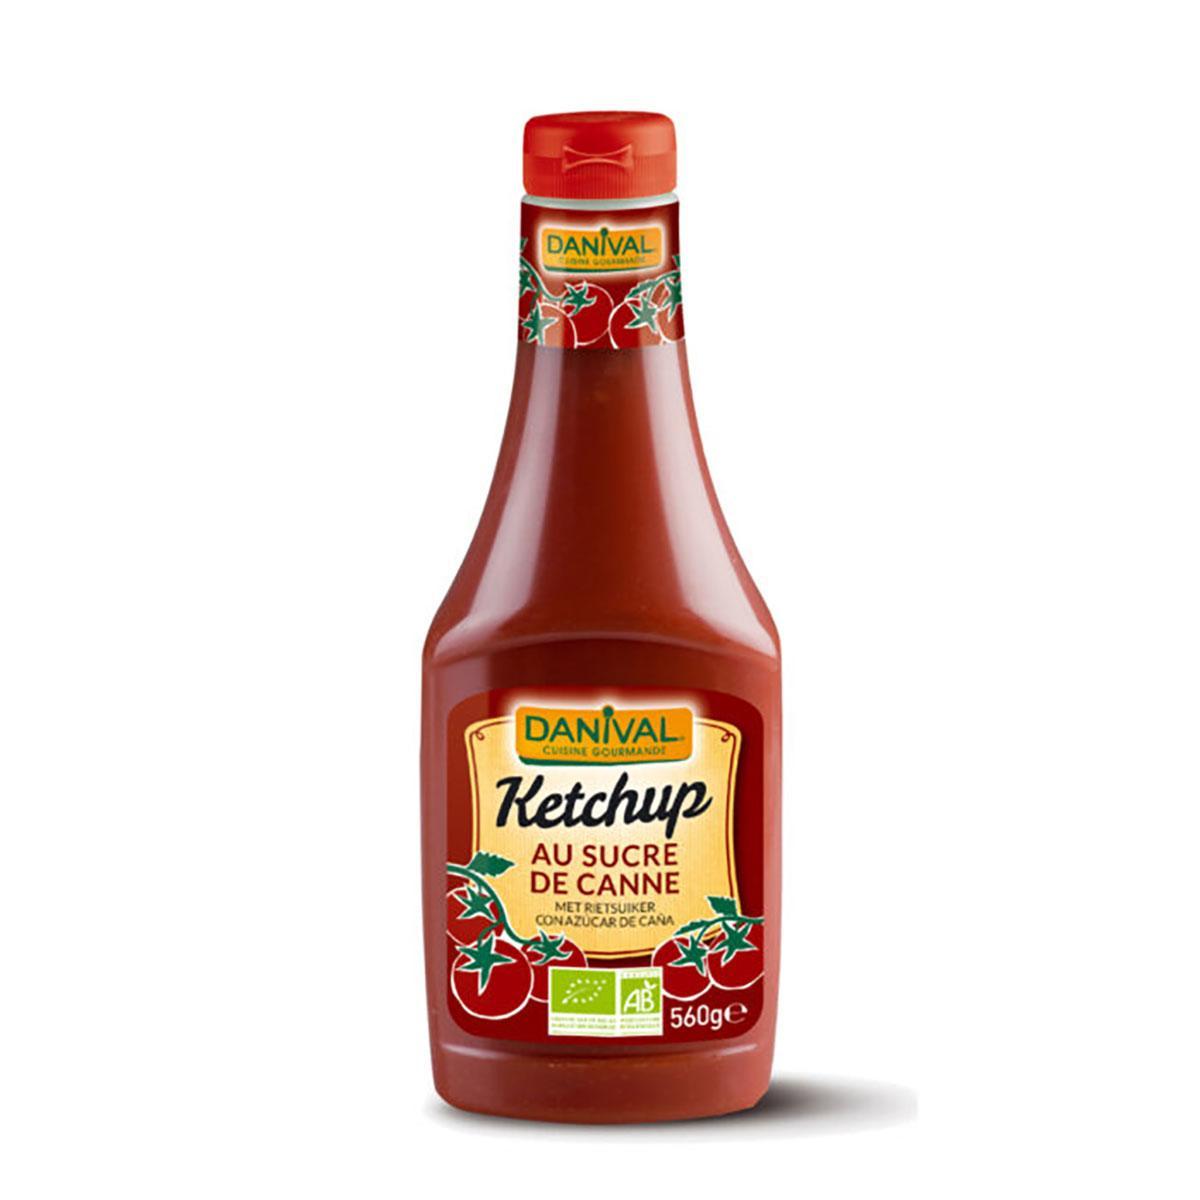 Ketchup von Danival Biodynamiska Produkter